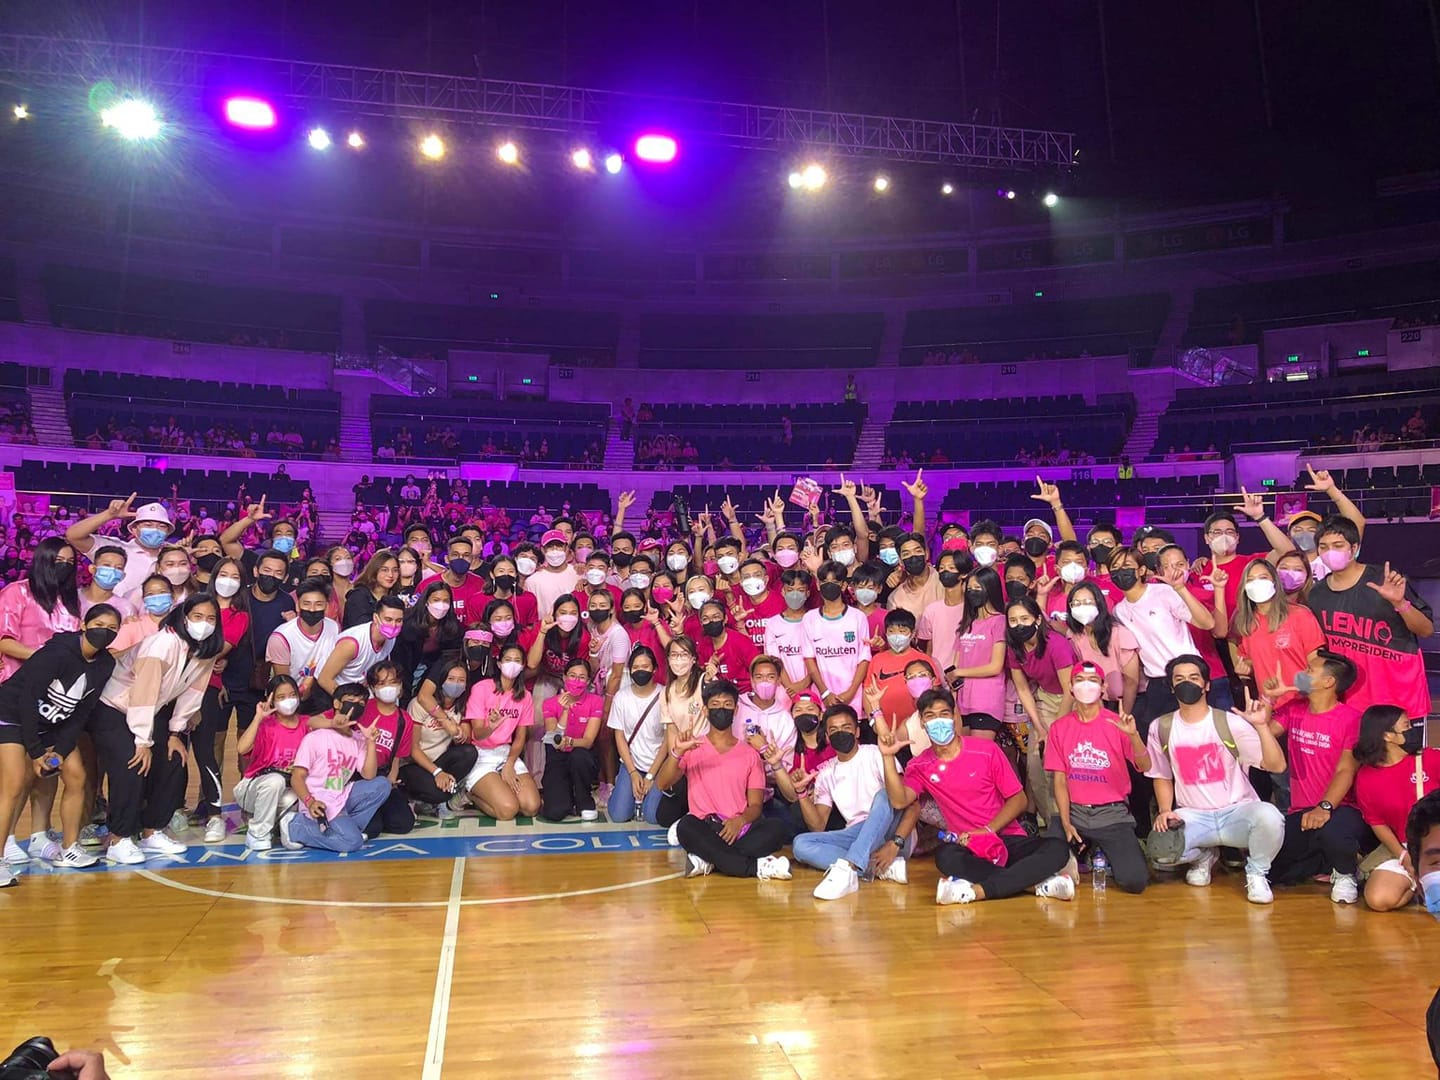 Attendees of the ANGATLETA event at Smart Araneta Coliseum on Tuesday.